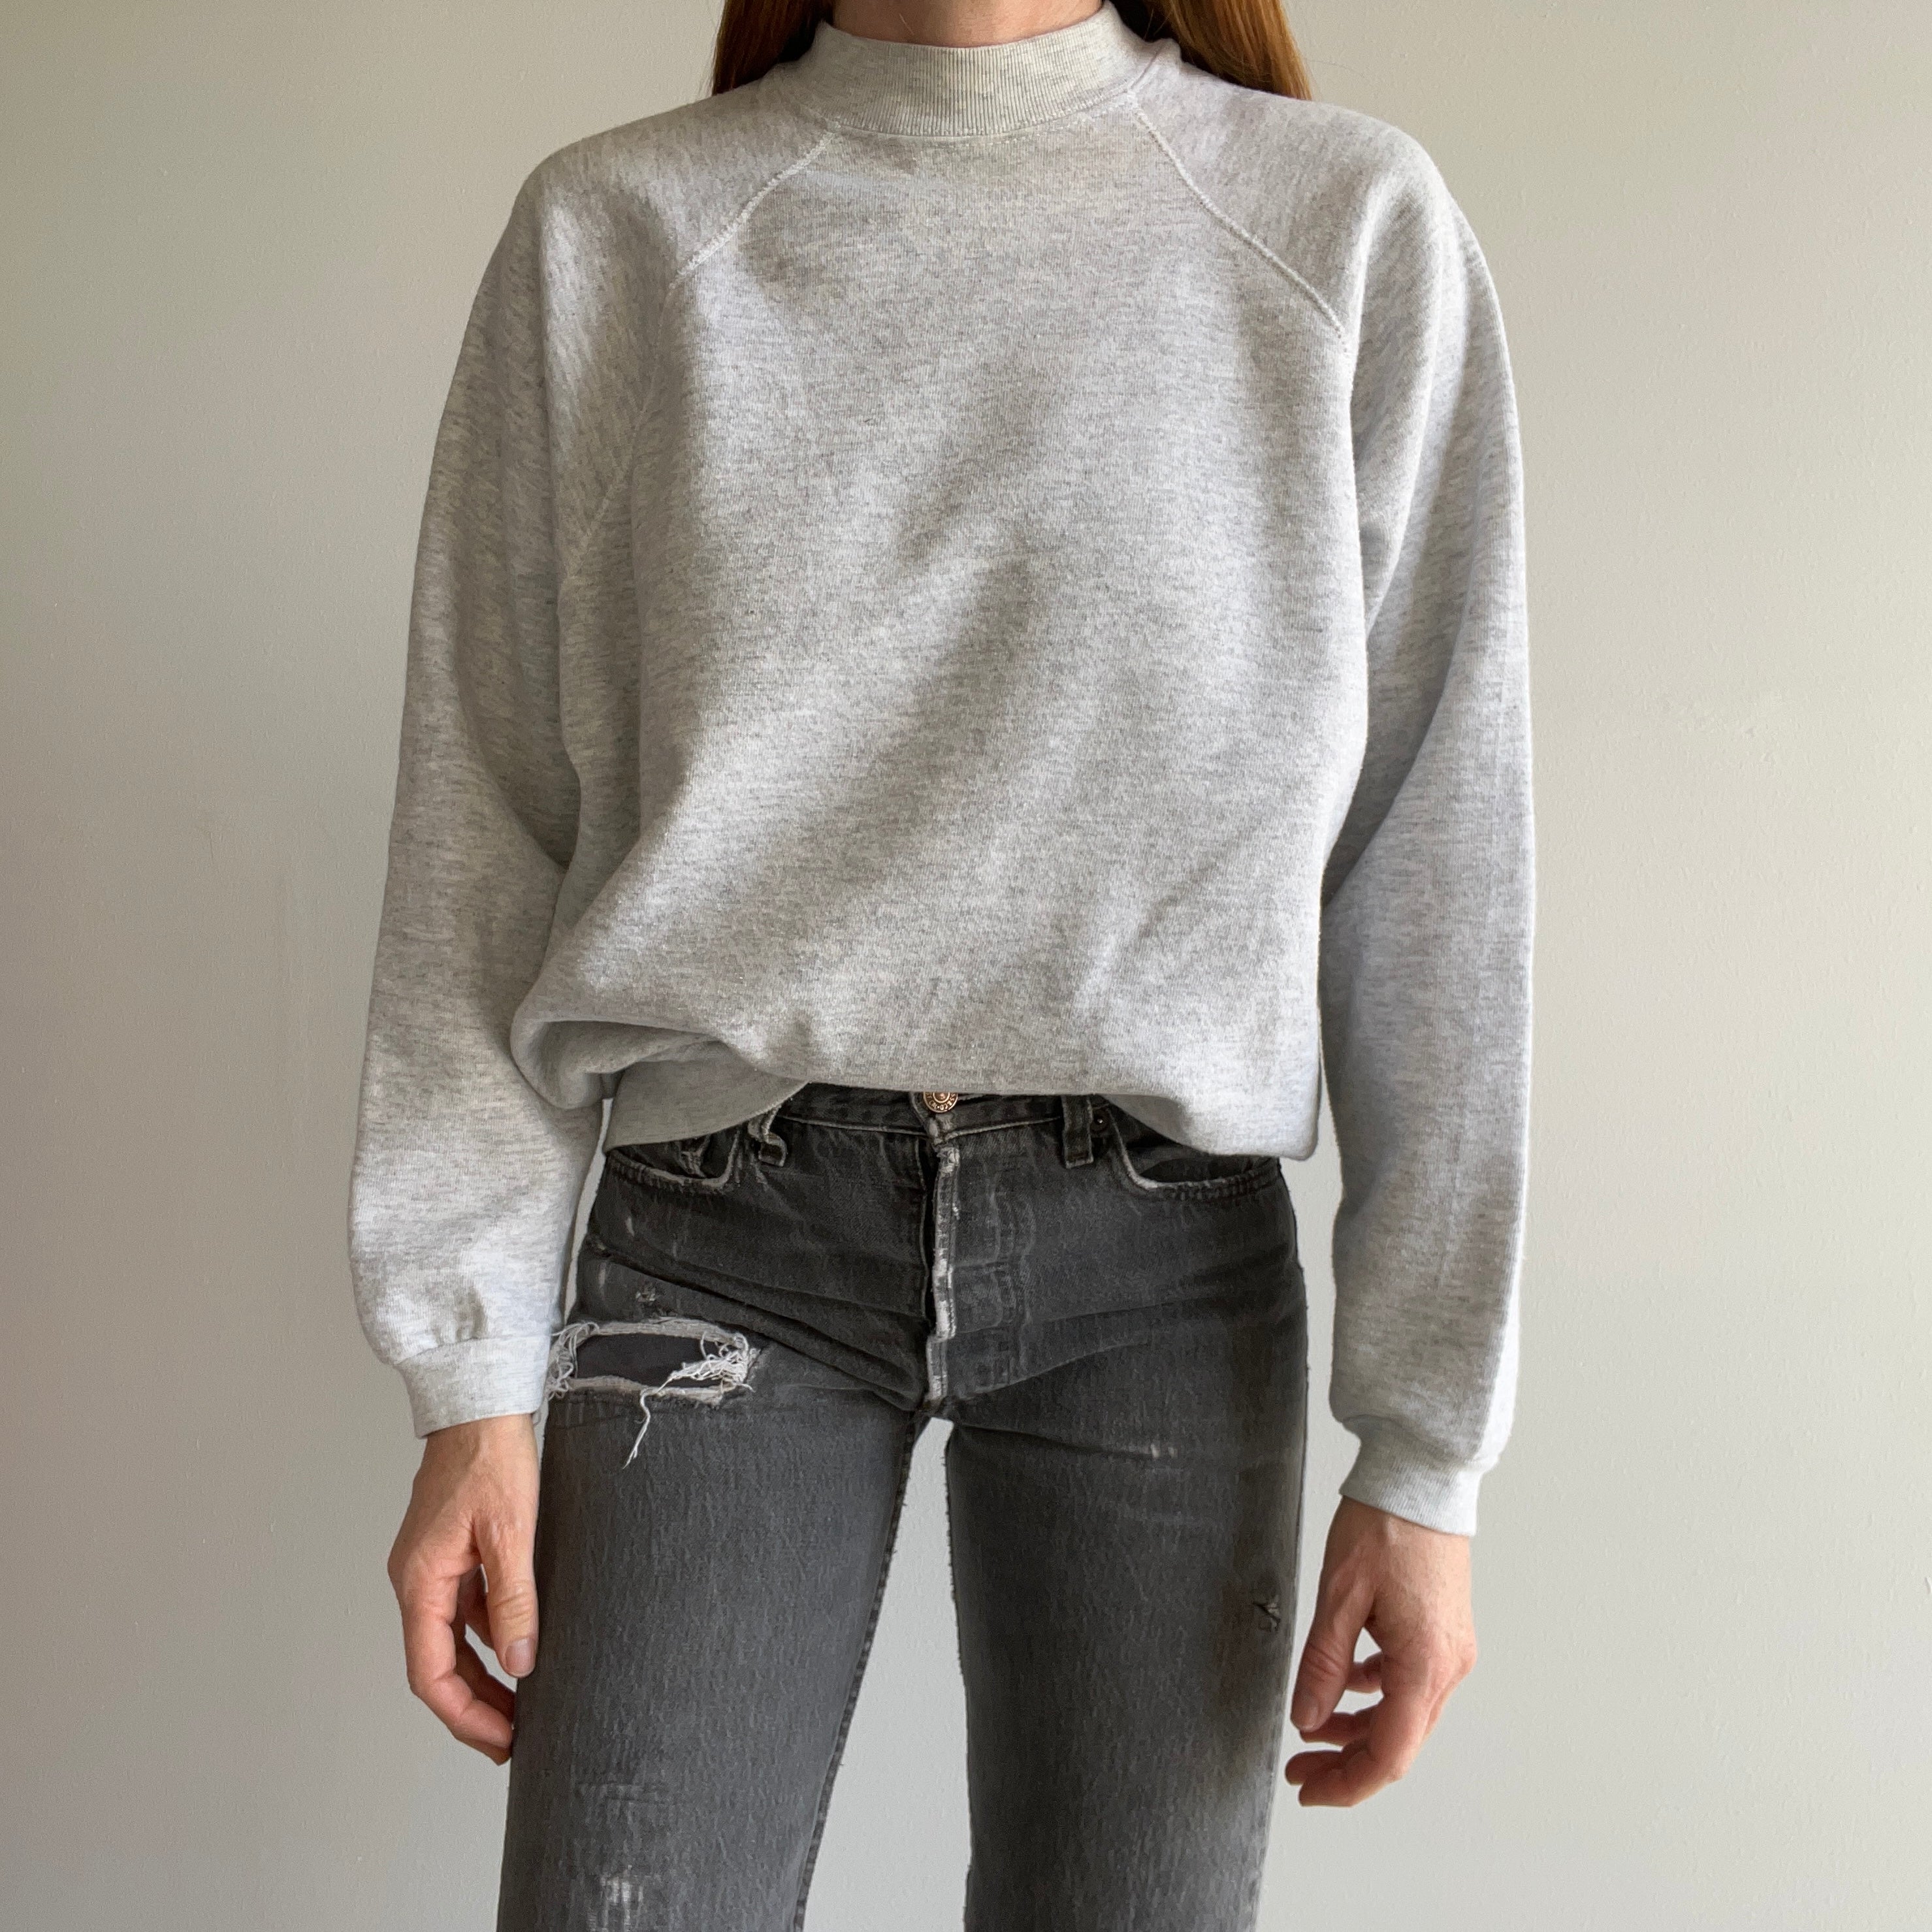 1980s Blank Light Gray Sweatshirt by Tultex